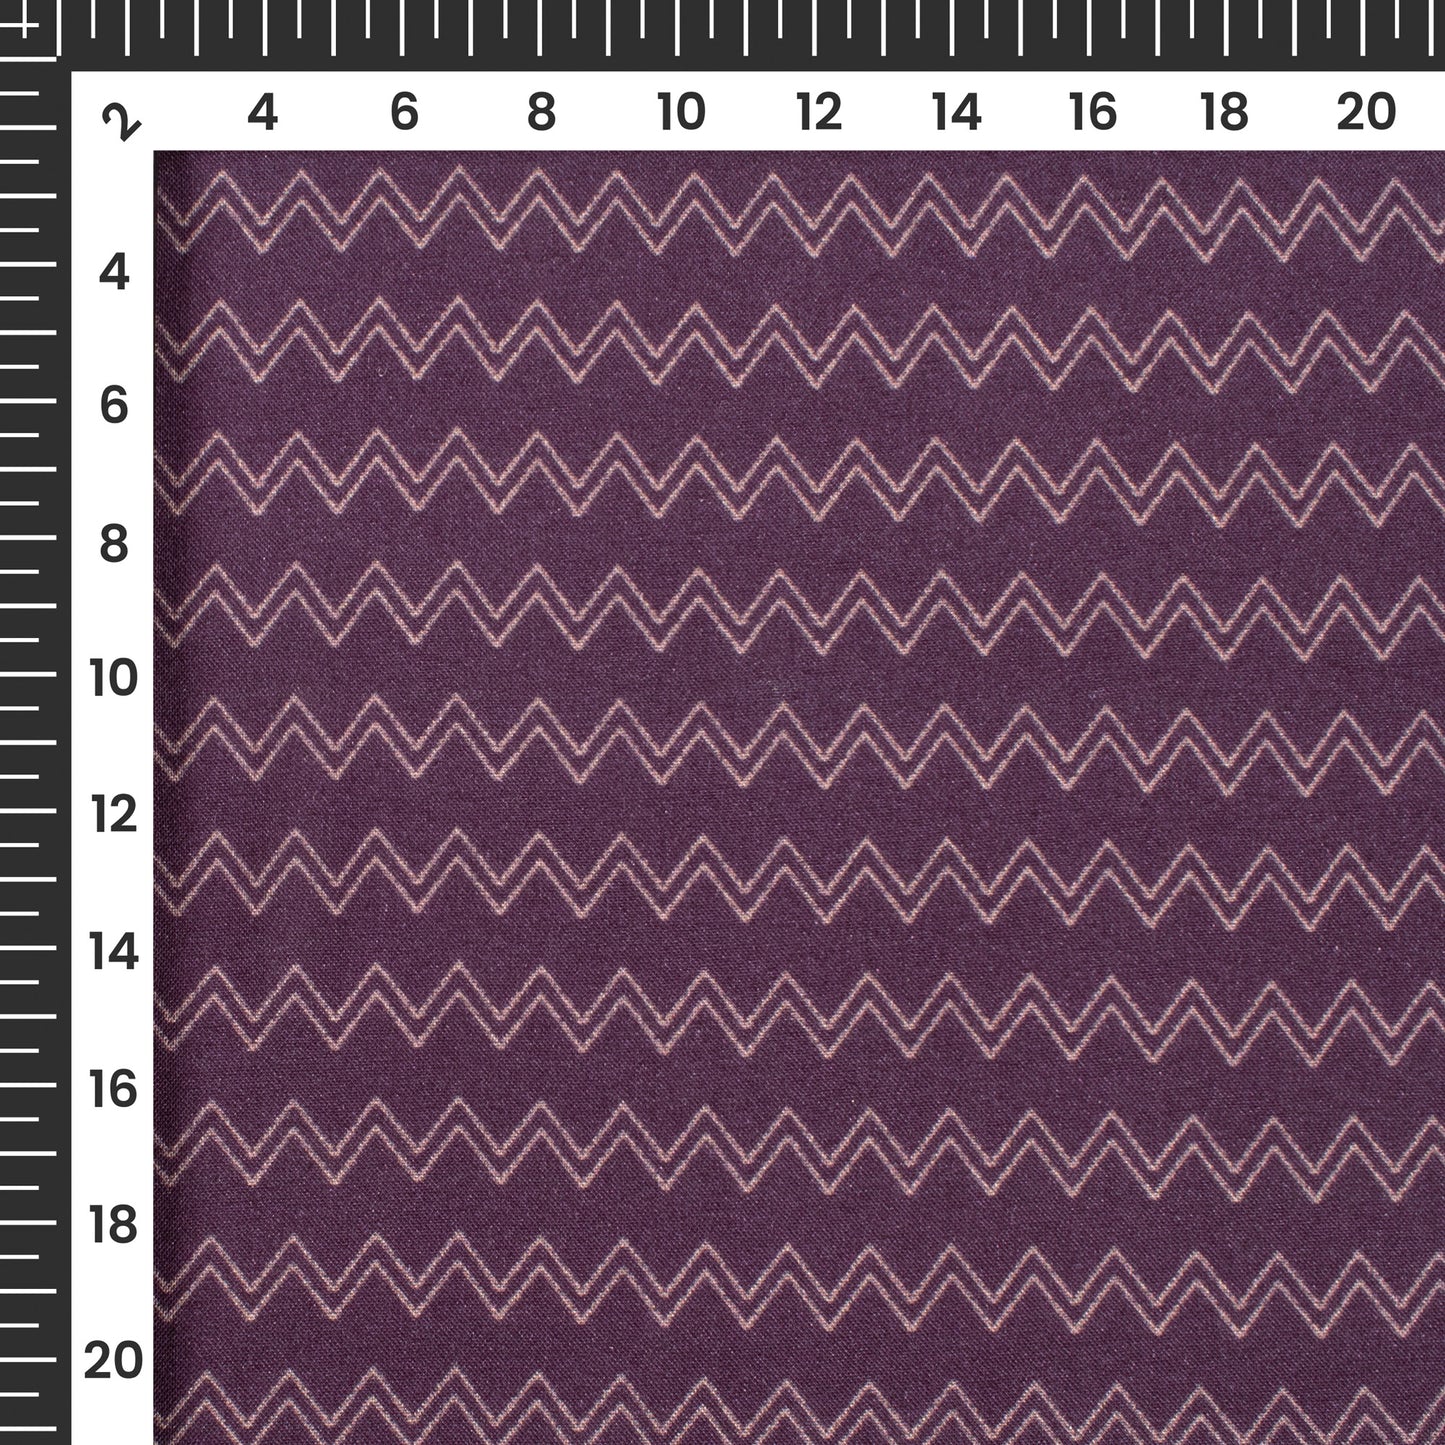 Zig Zag Geometric Digital Print Viscose Rayon Fabric (Width 58 Inches)